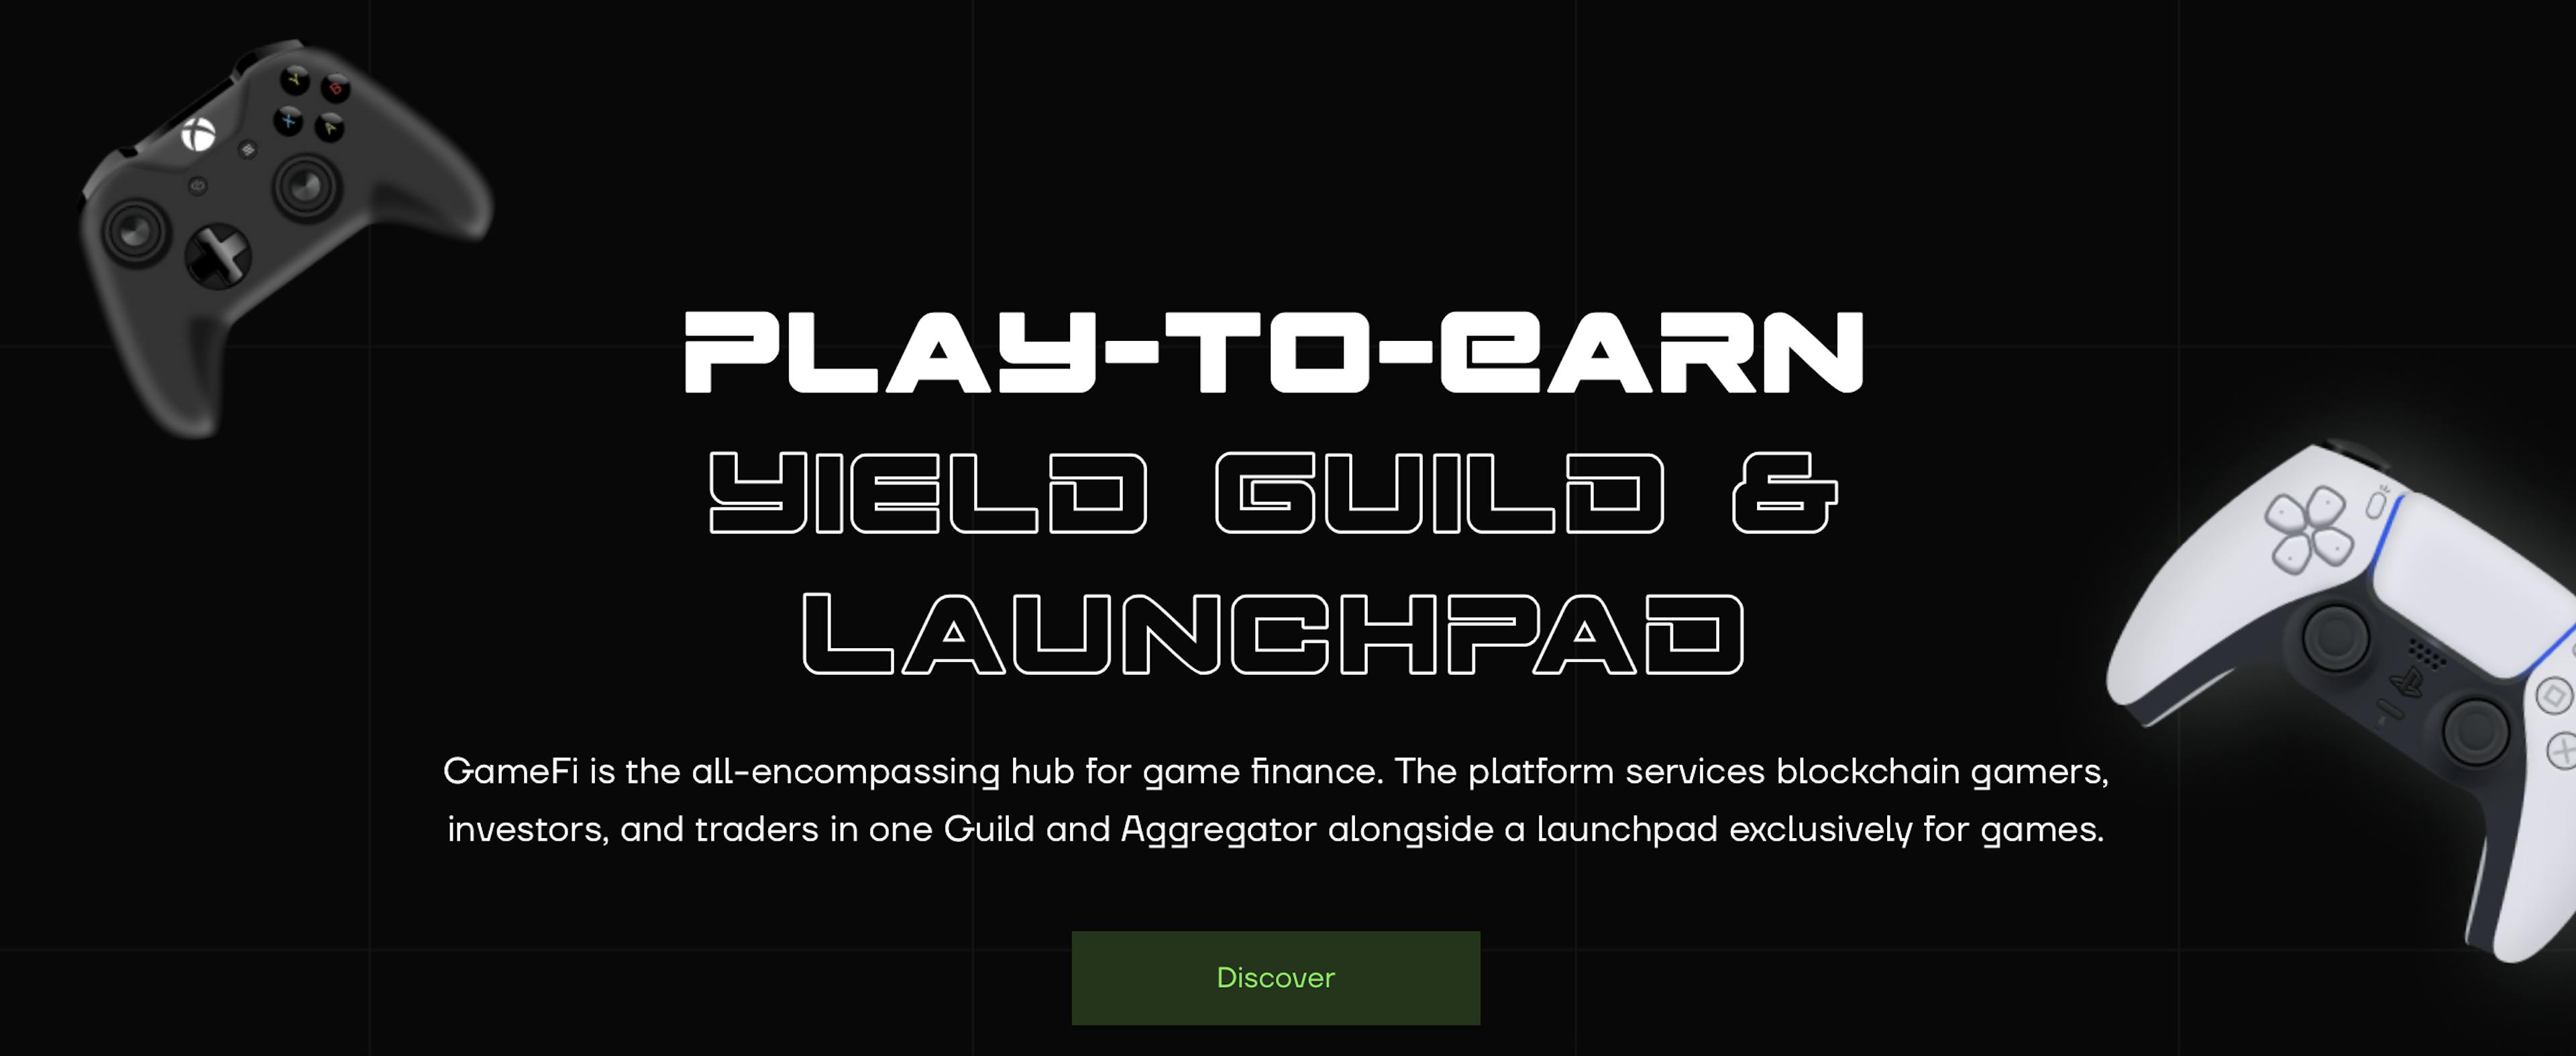 GameFi Launchpad 